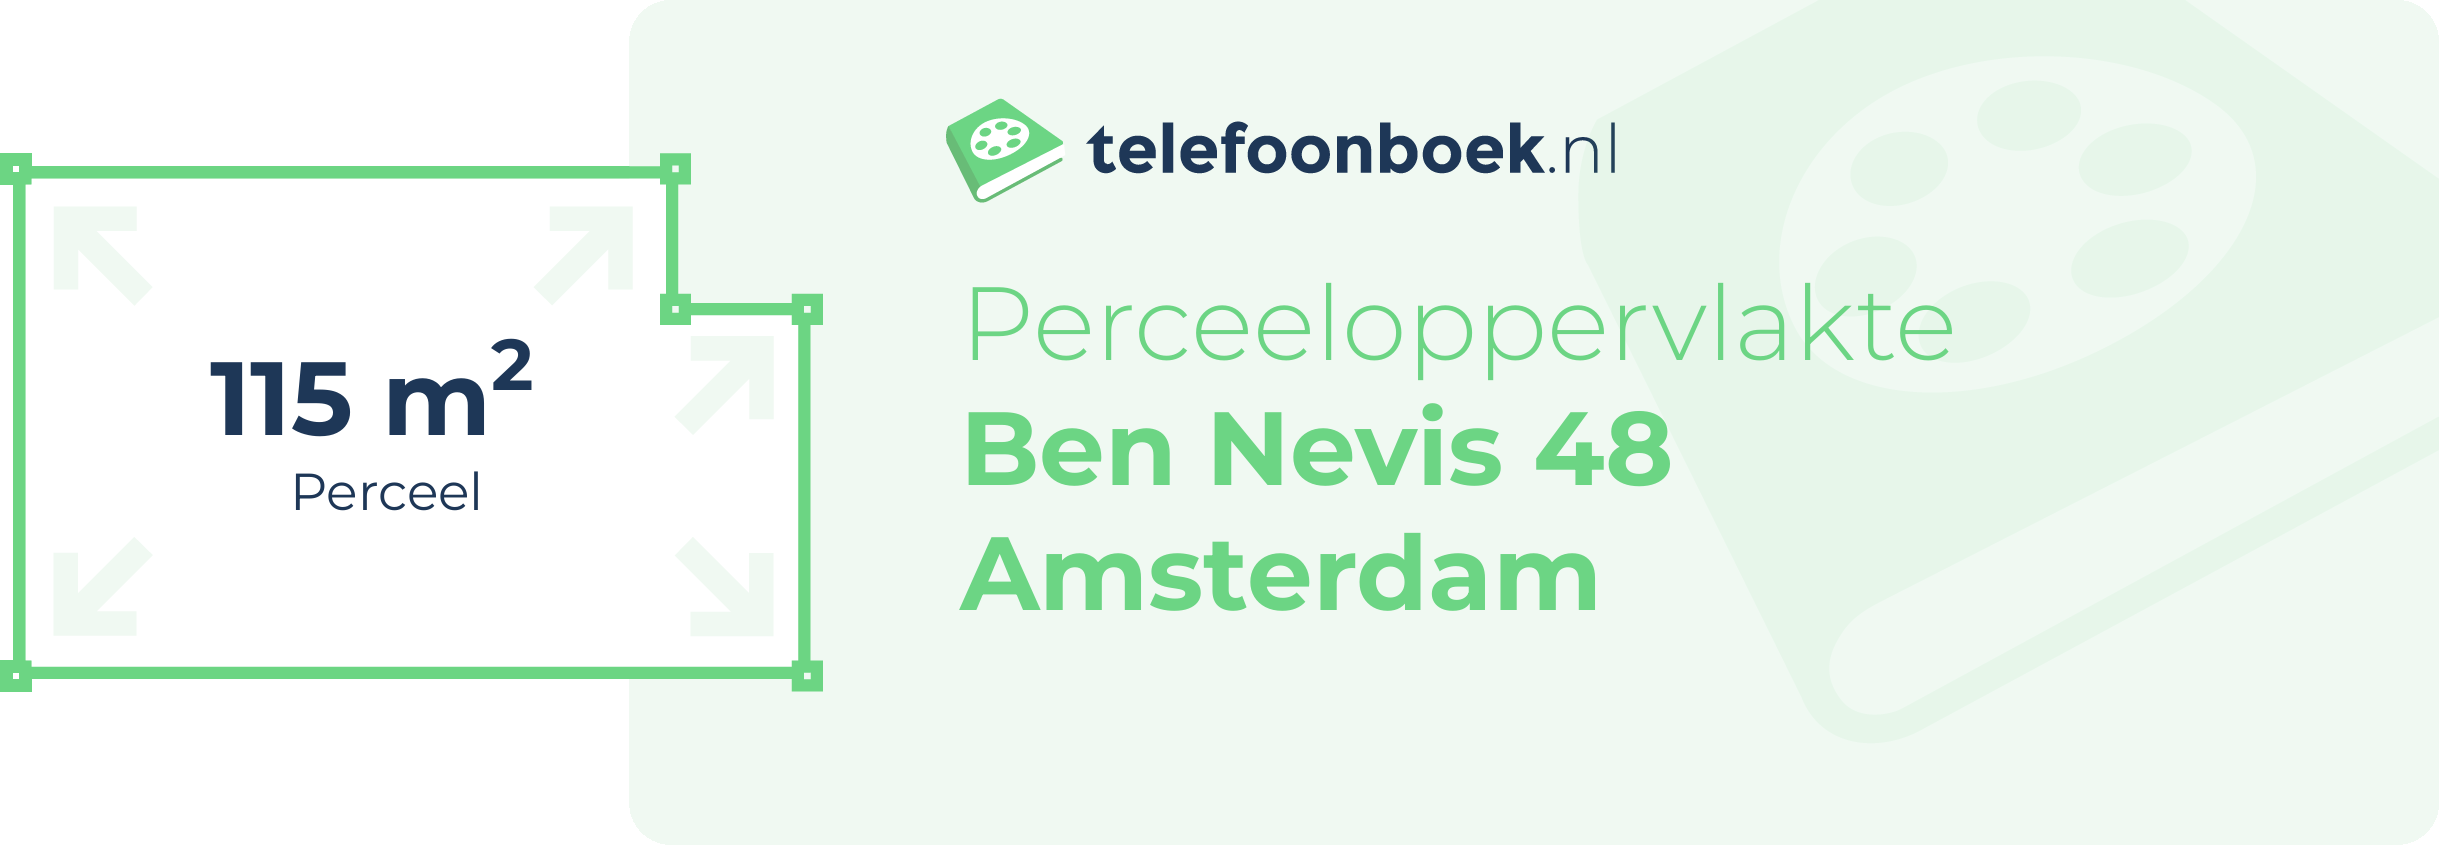 Perceeloppervlakte Ben Nevis 48 Amsterdam